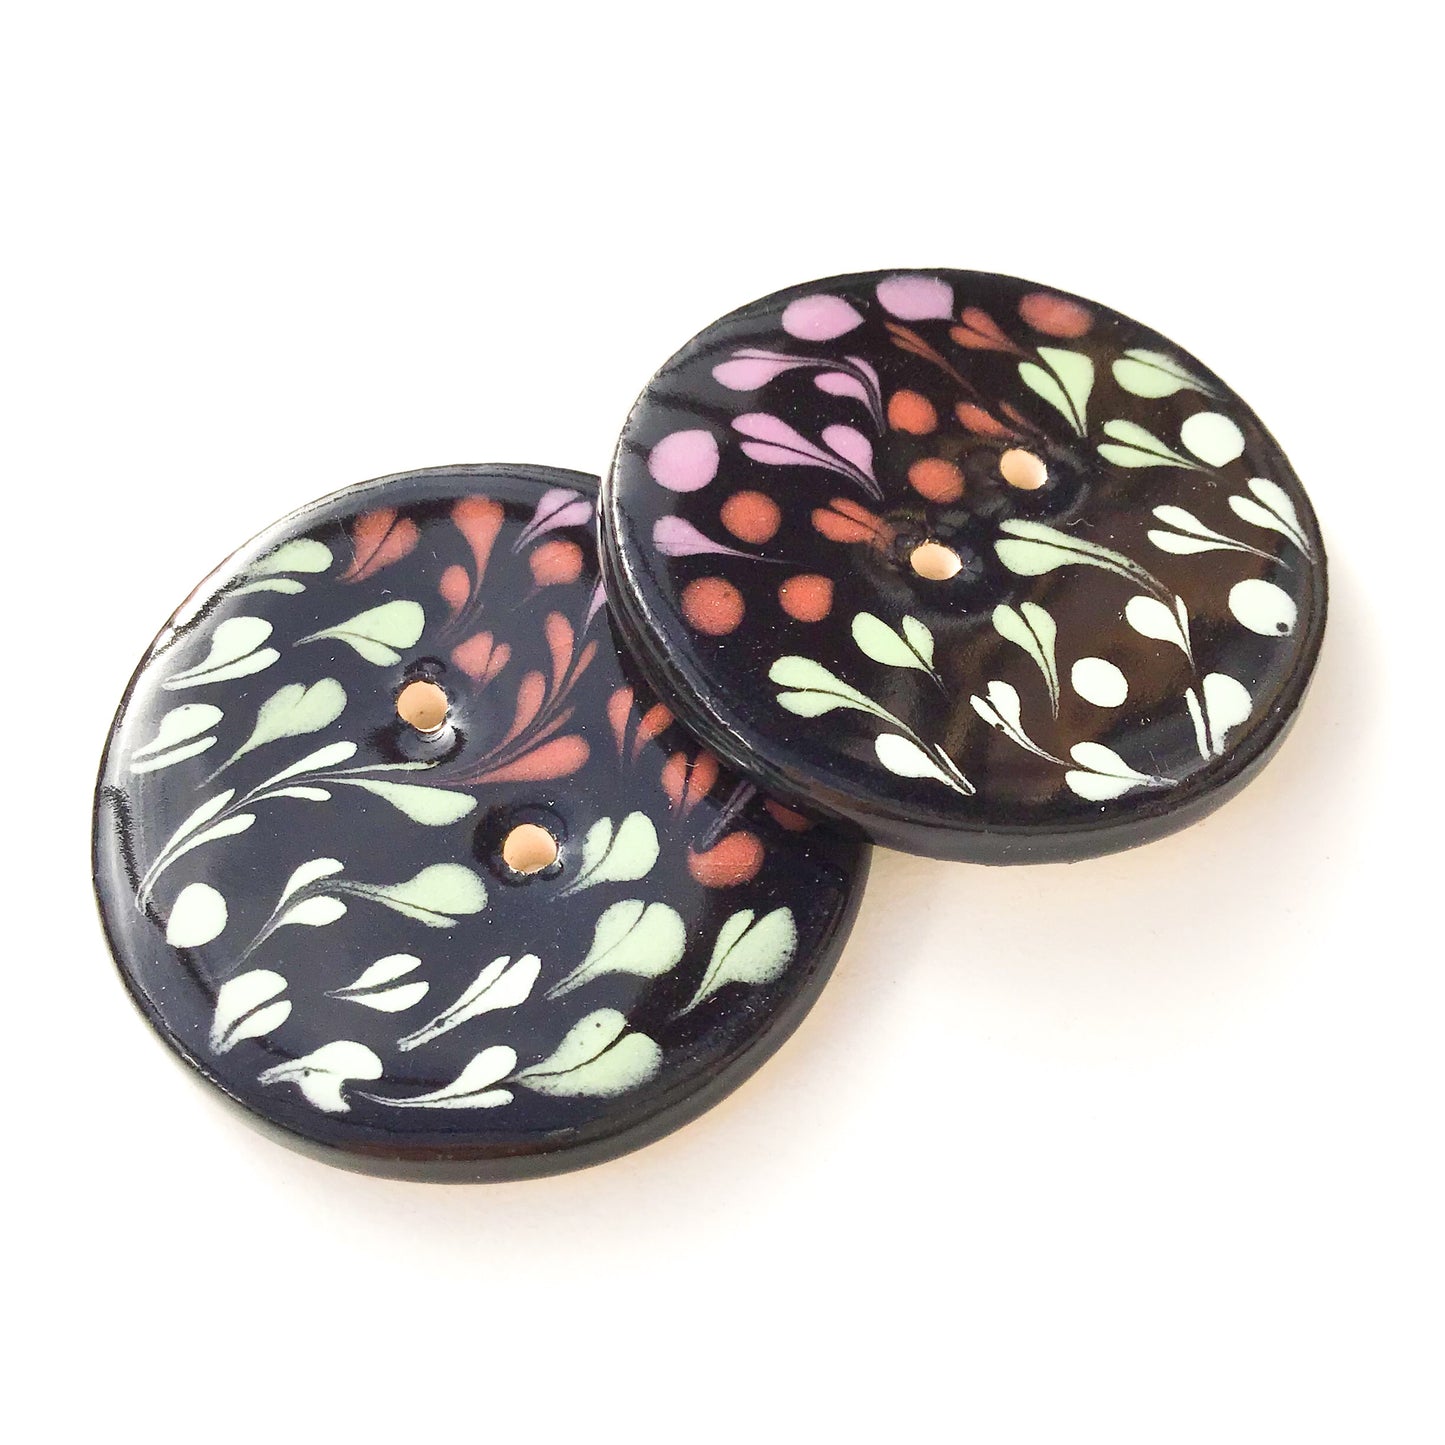 Color Drag Ceramic Buttons in Black & Warm Tones - Decorative Ceramic Button - 1 3/8"